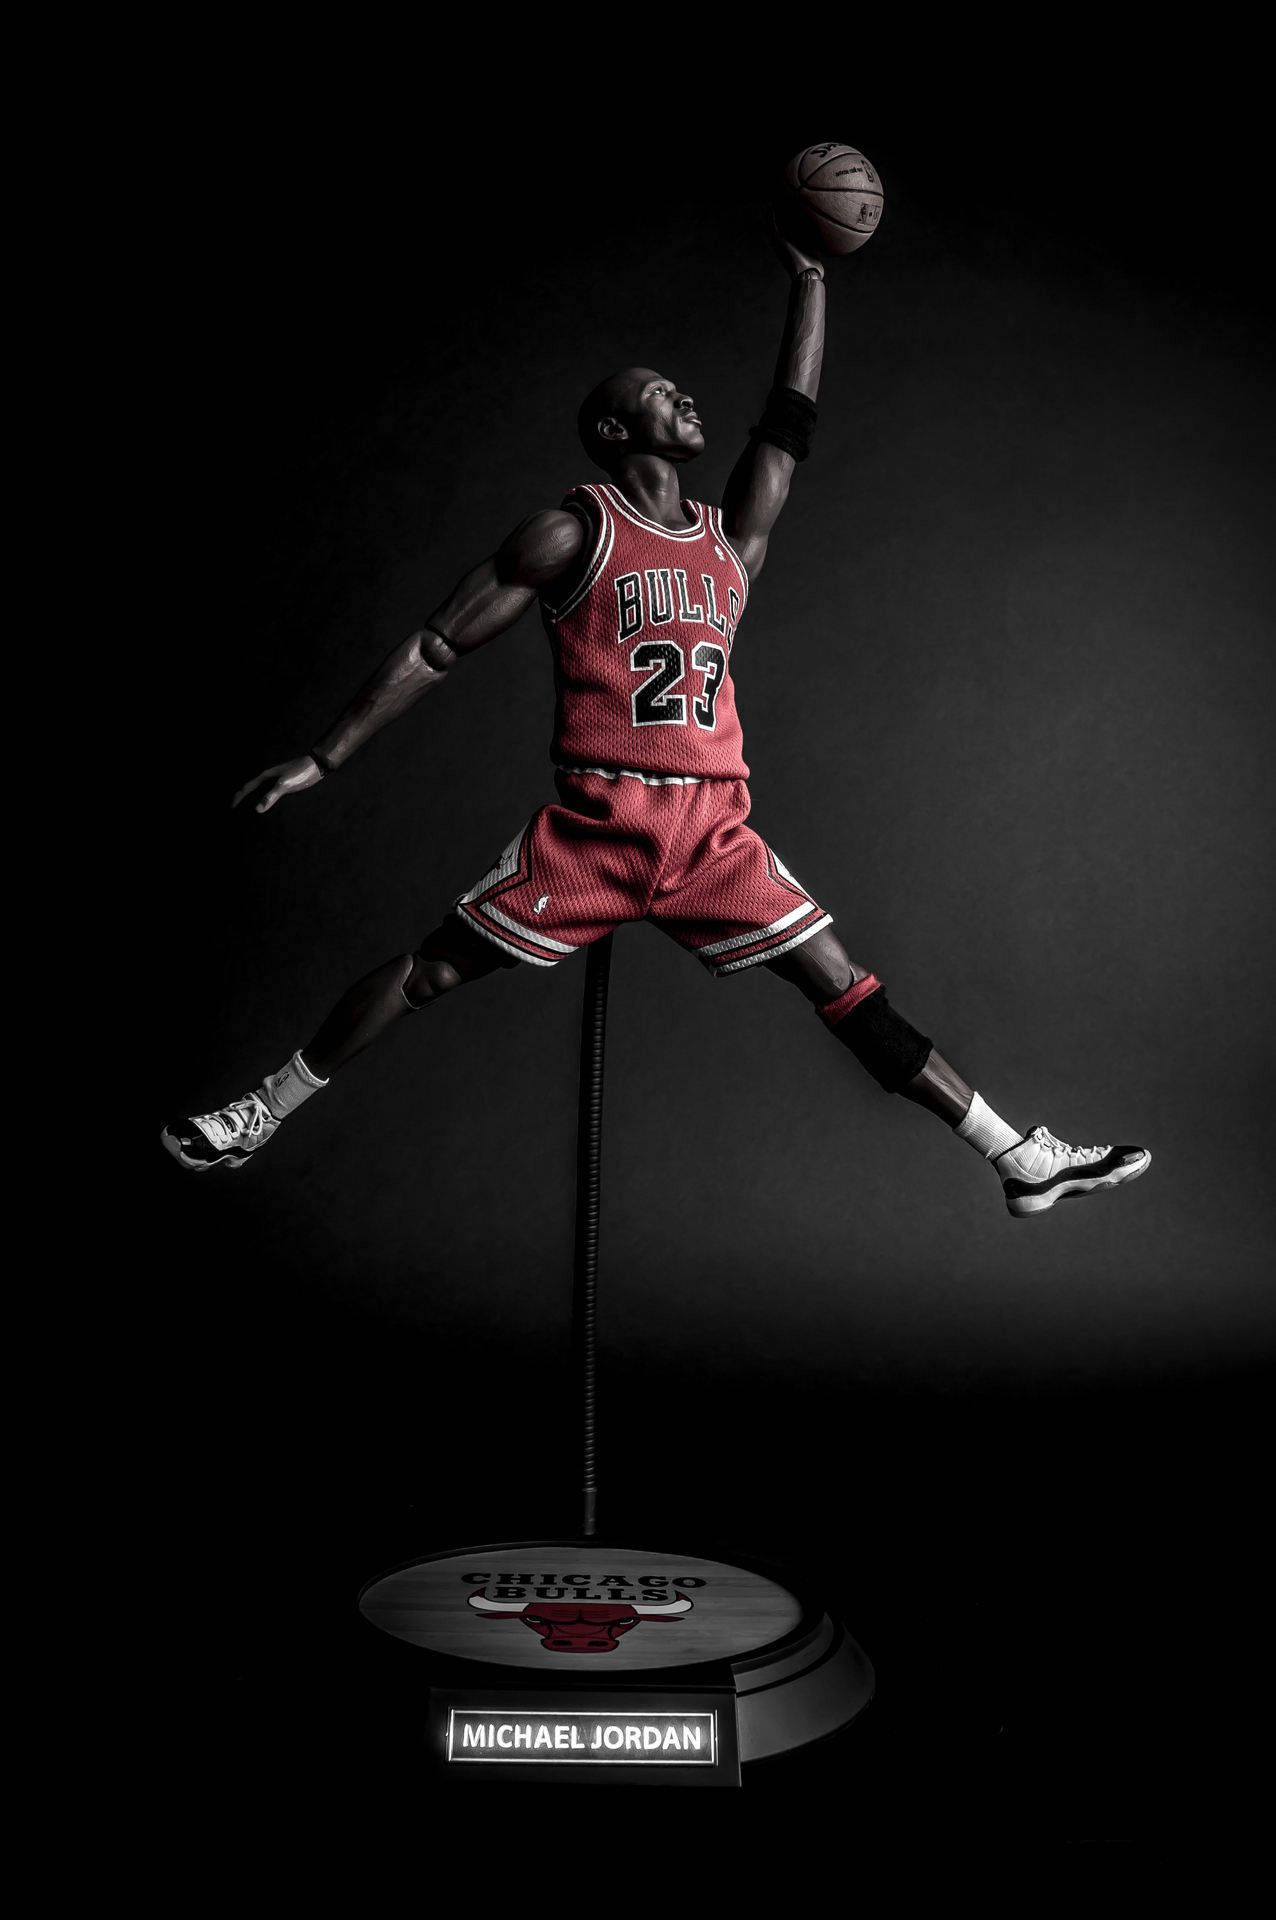 Cool Michael Jordan Action Figure Wallpaper